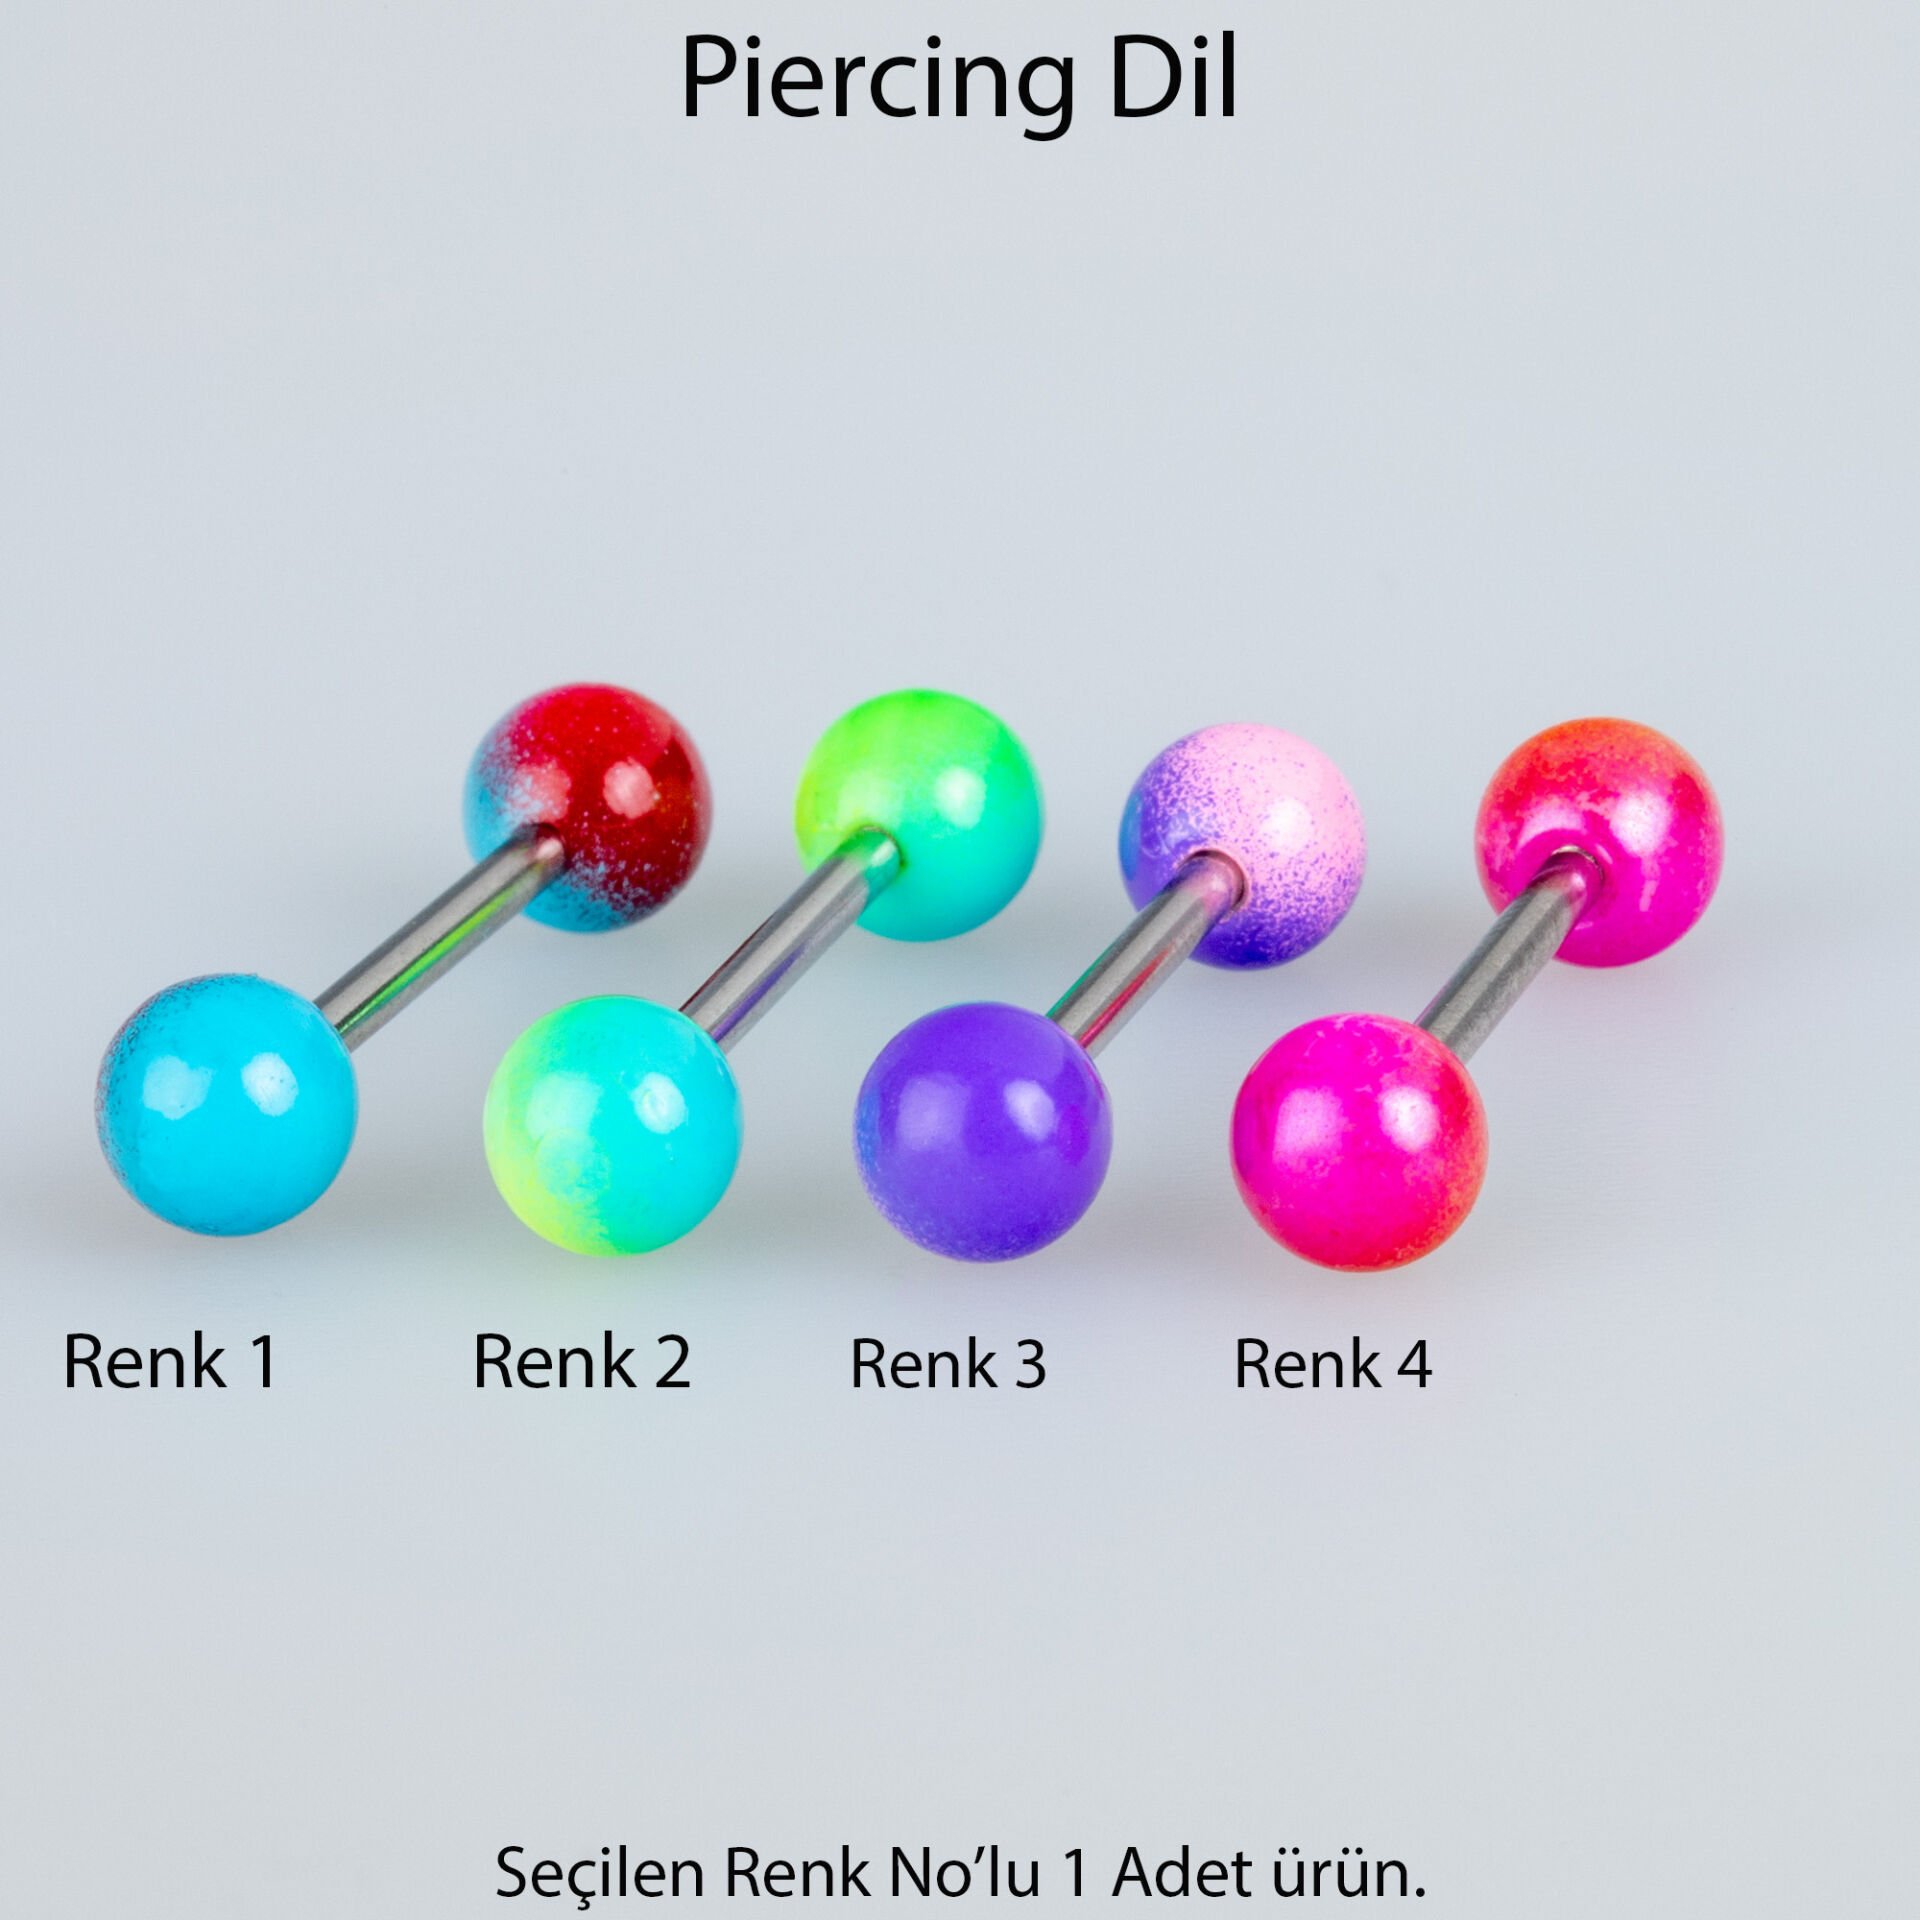 Piercing Dil